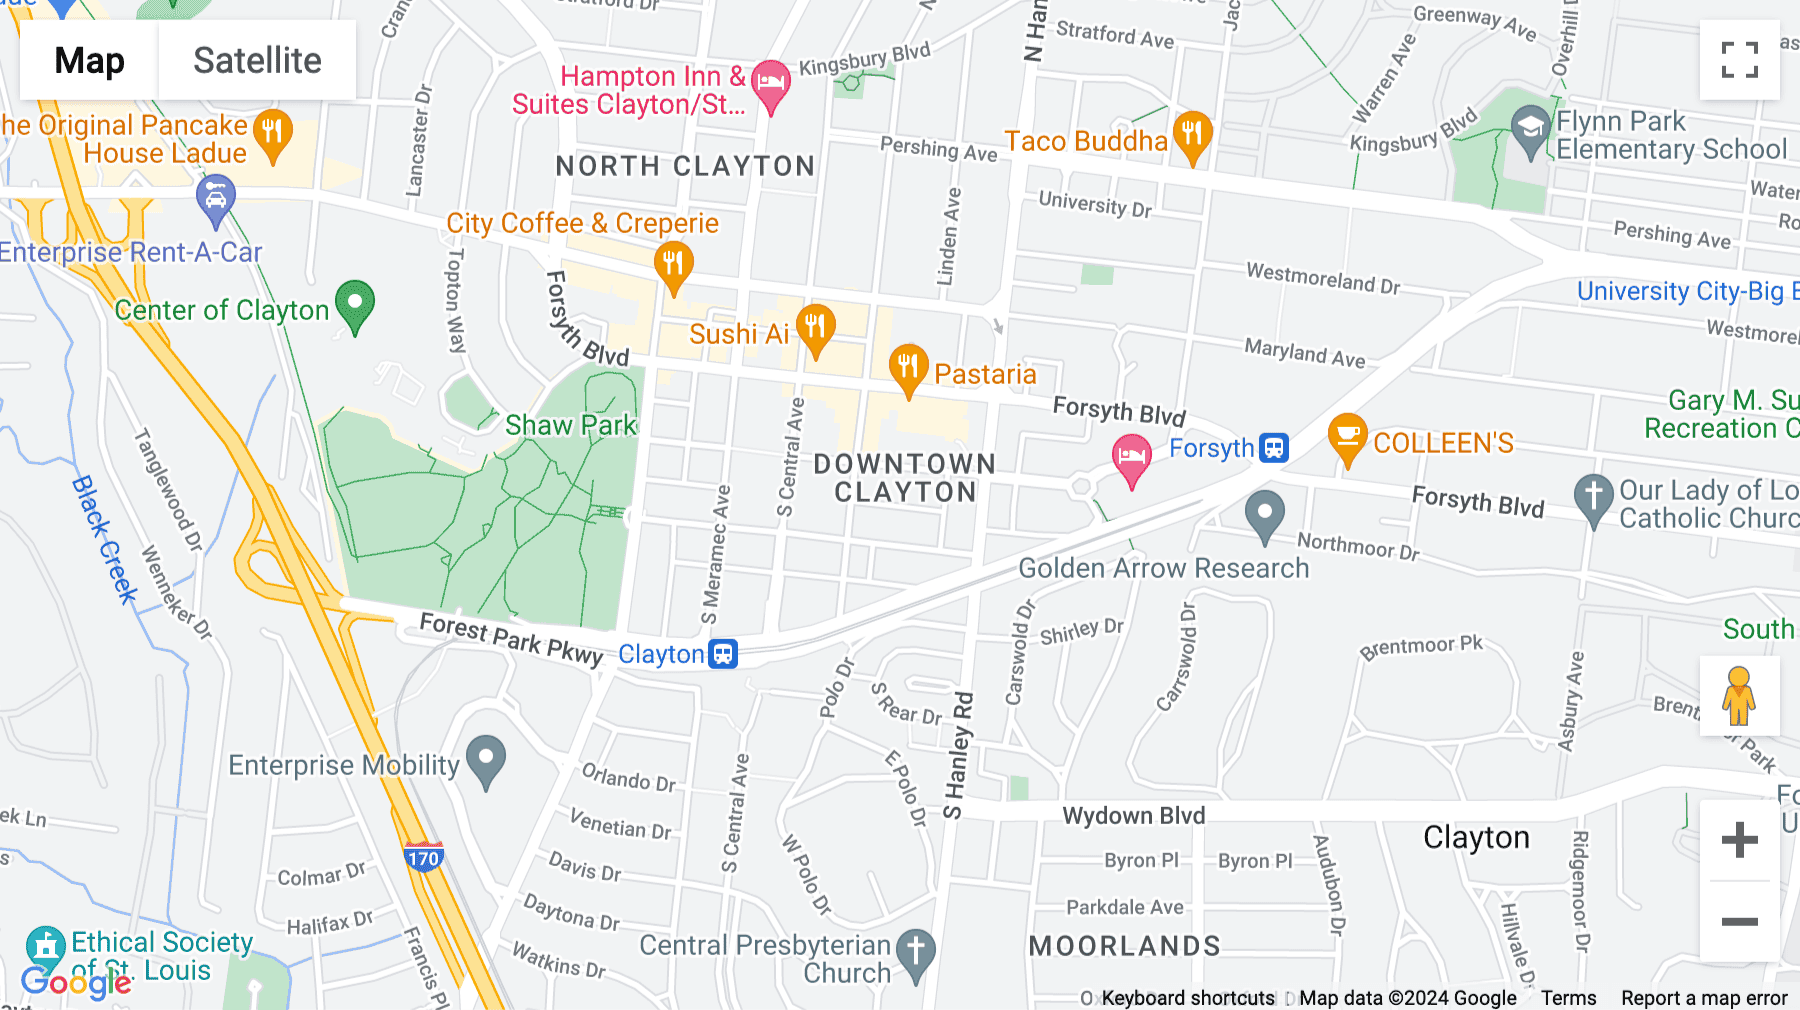 Click for interative map of 7777 Bonhomme Avenue, Suite 1800, Sevens Building, Clayton